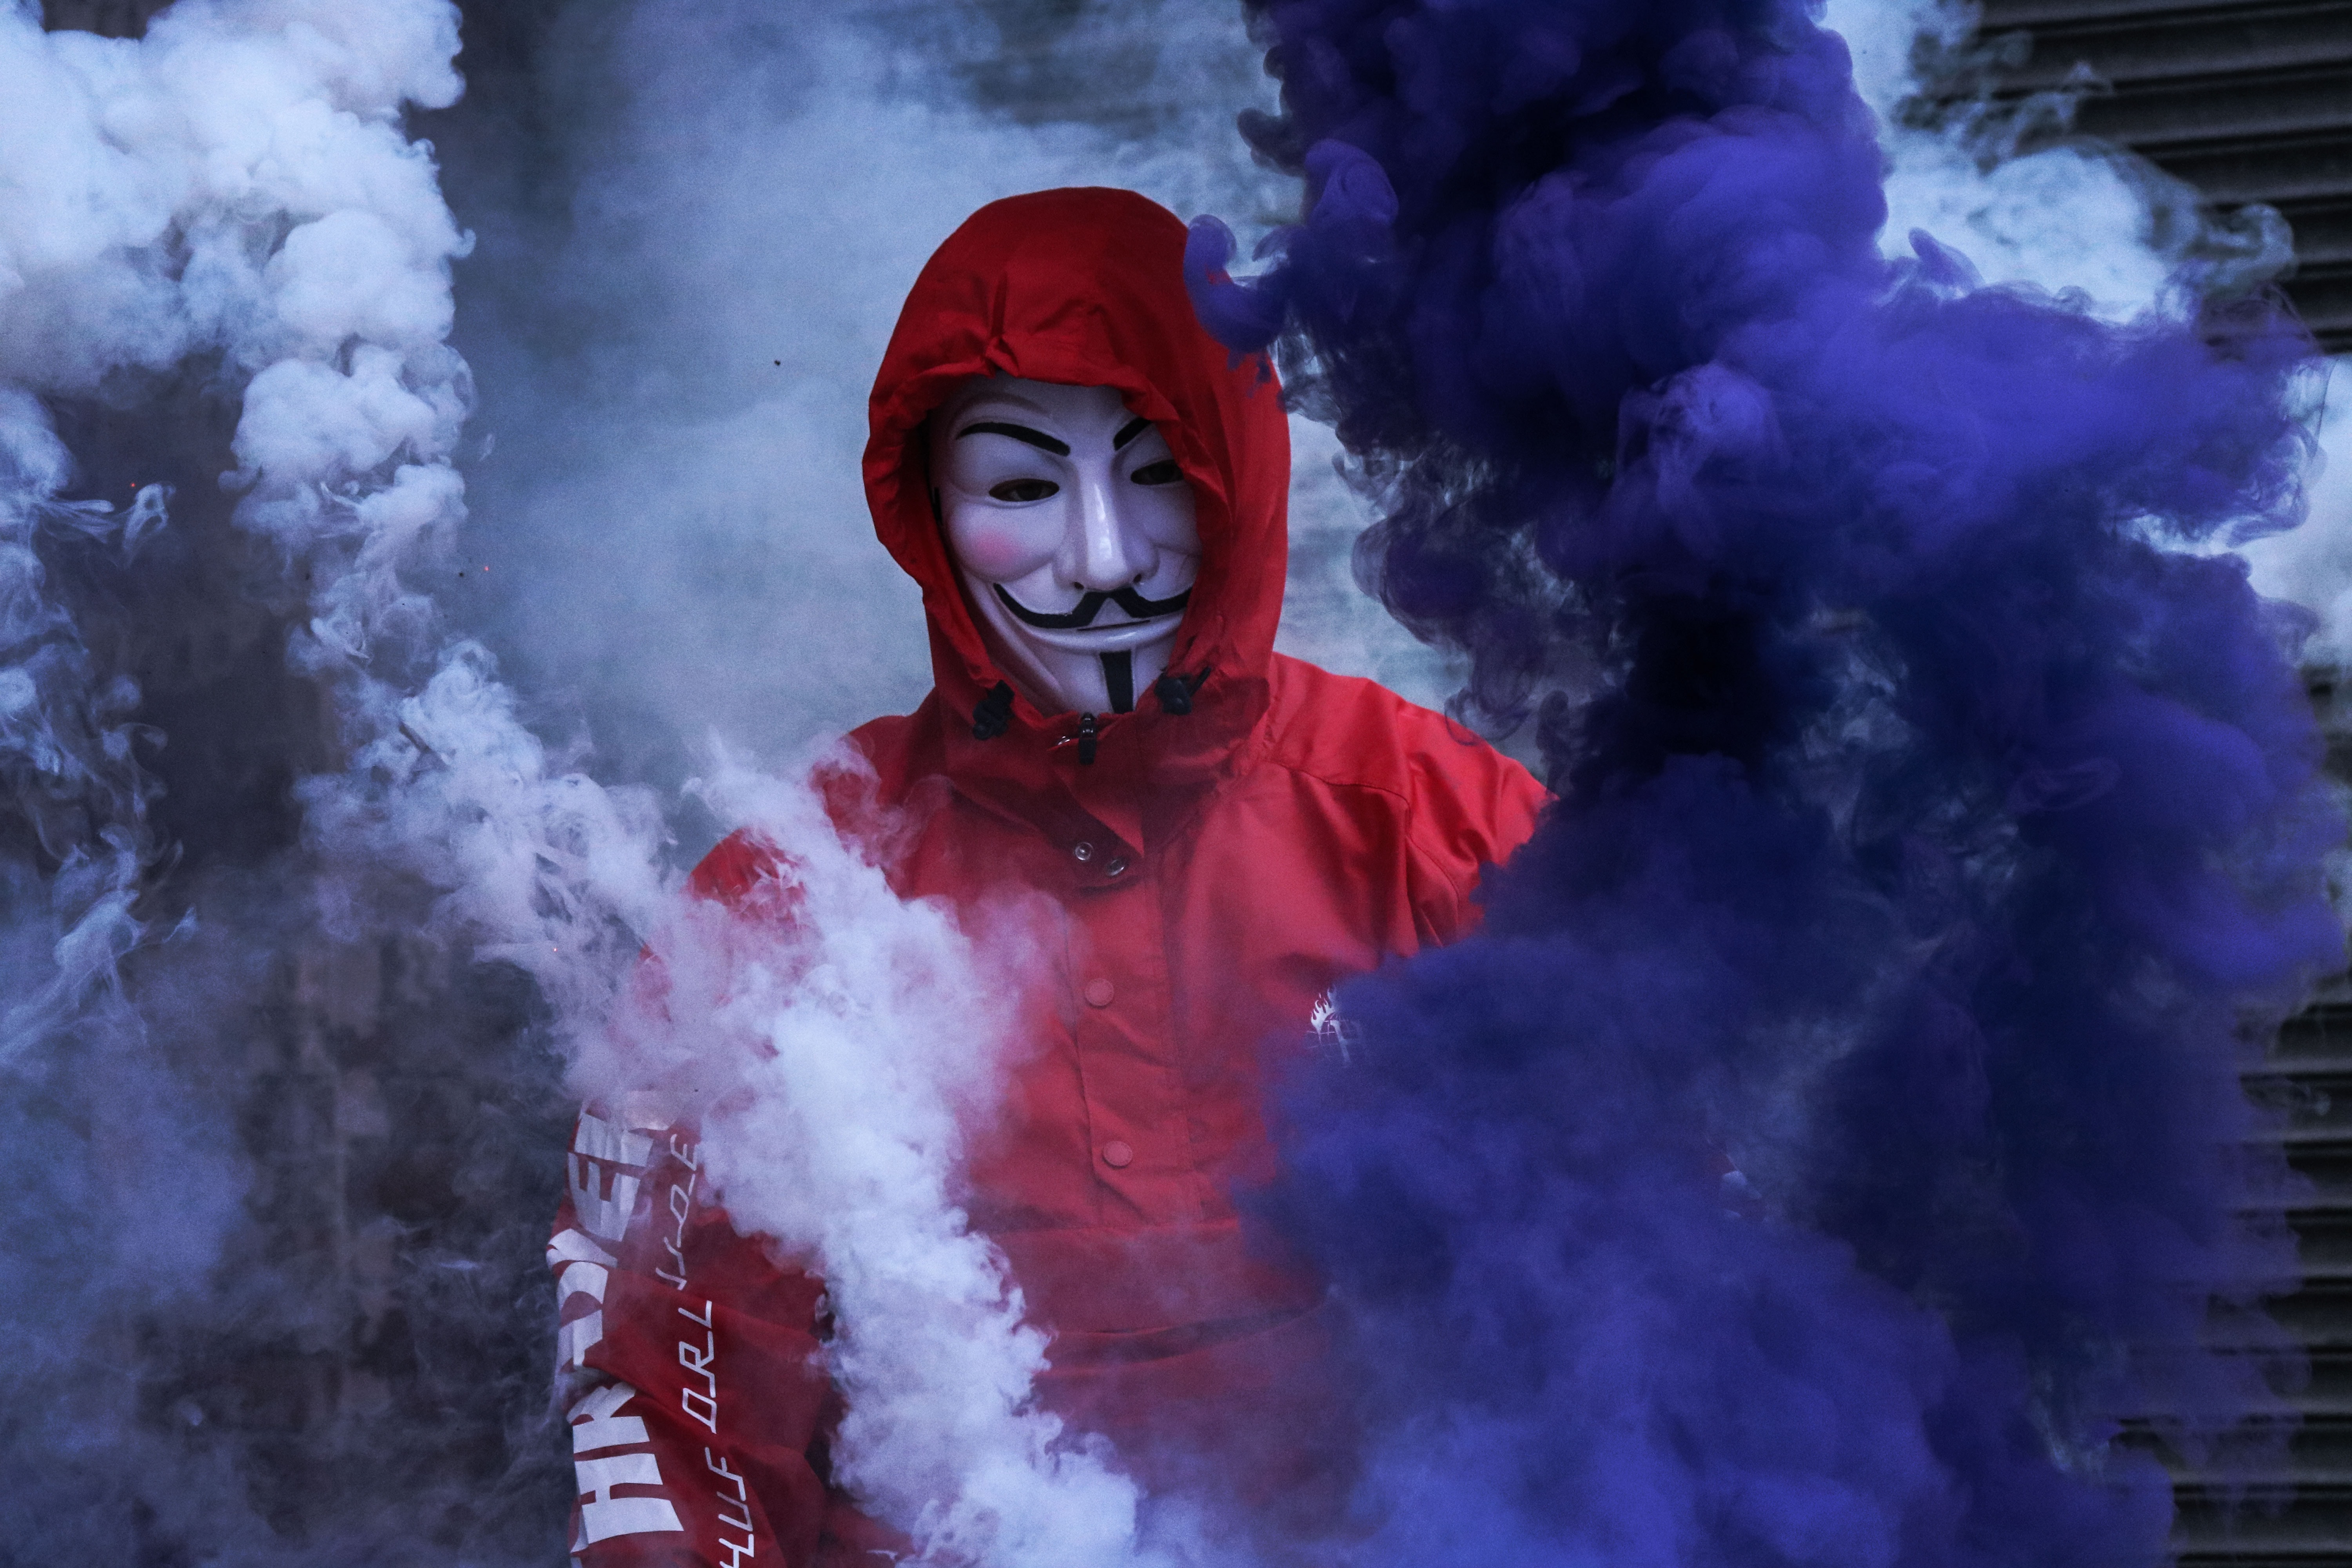 mask, anonymous, smoke, miscellanea, miscellaneous, smoke bomb